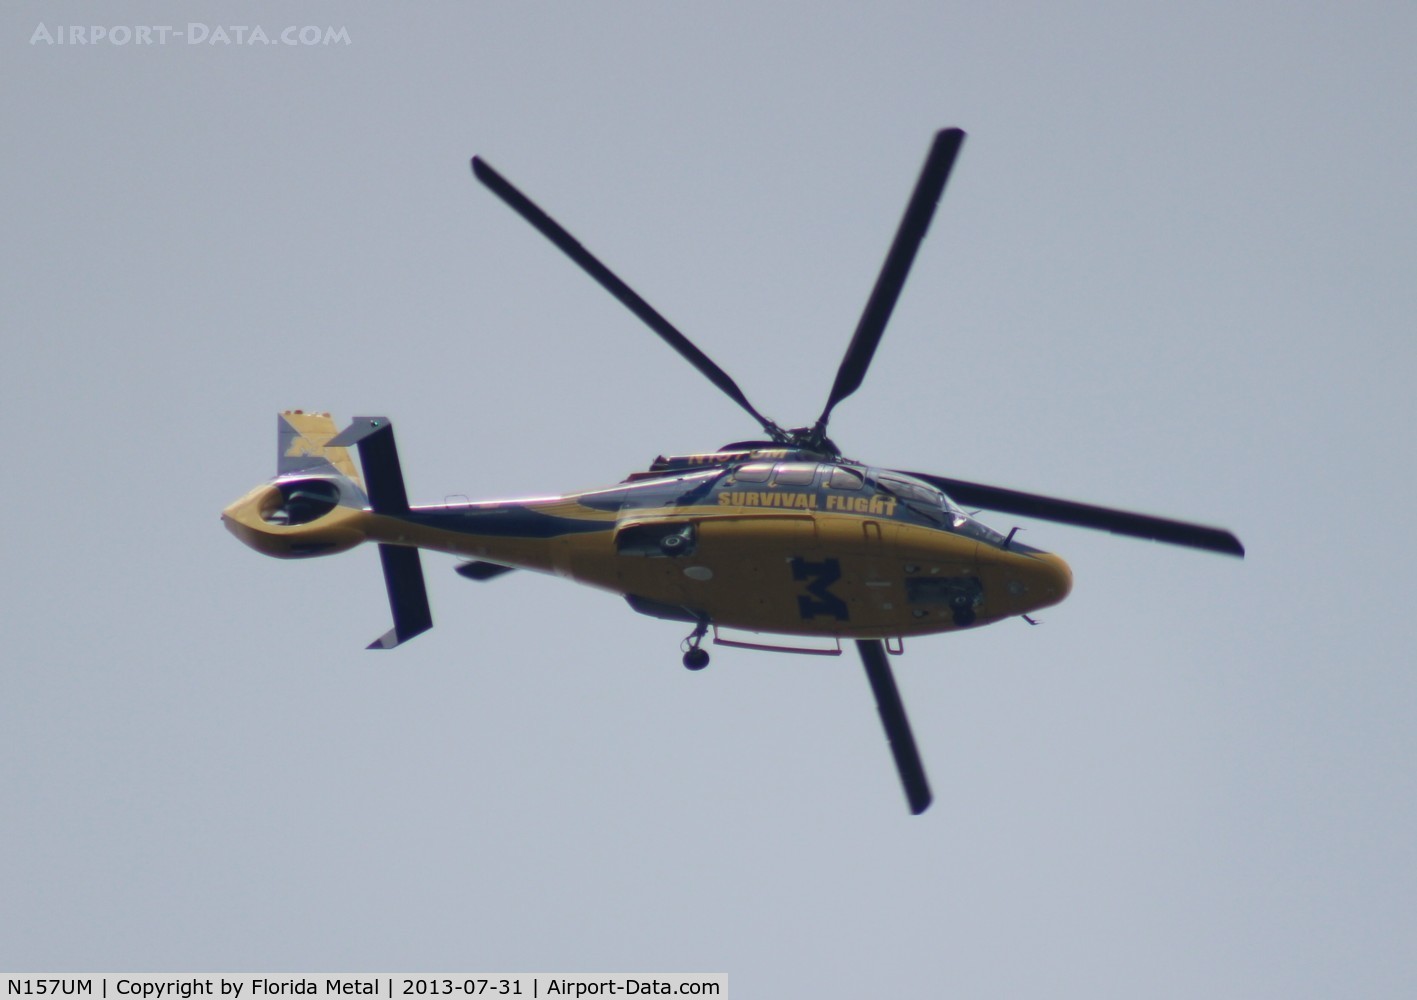 N157UM, 2011 Eurocopter EC-155B-1 C/N 6933, University of Michigan Hospital EC155 departing St. Mary's Hospital Livonia Michigan